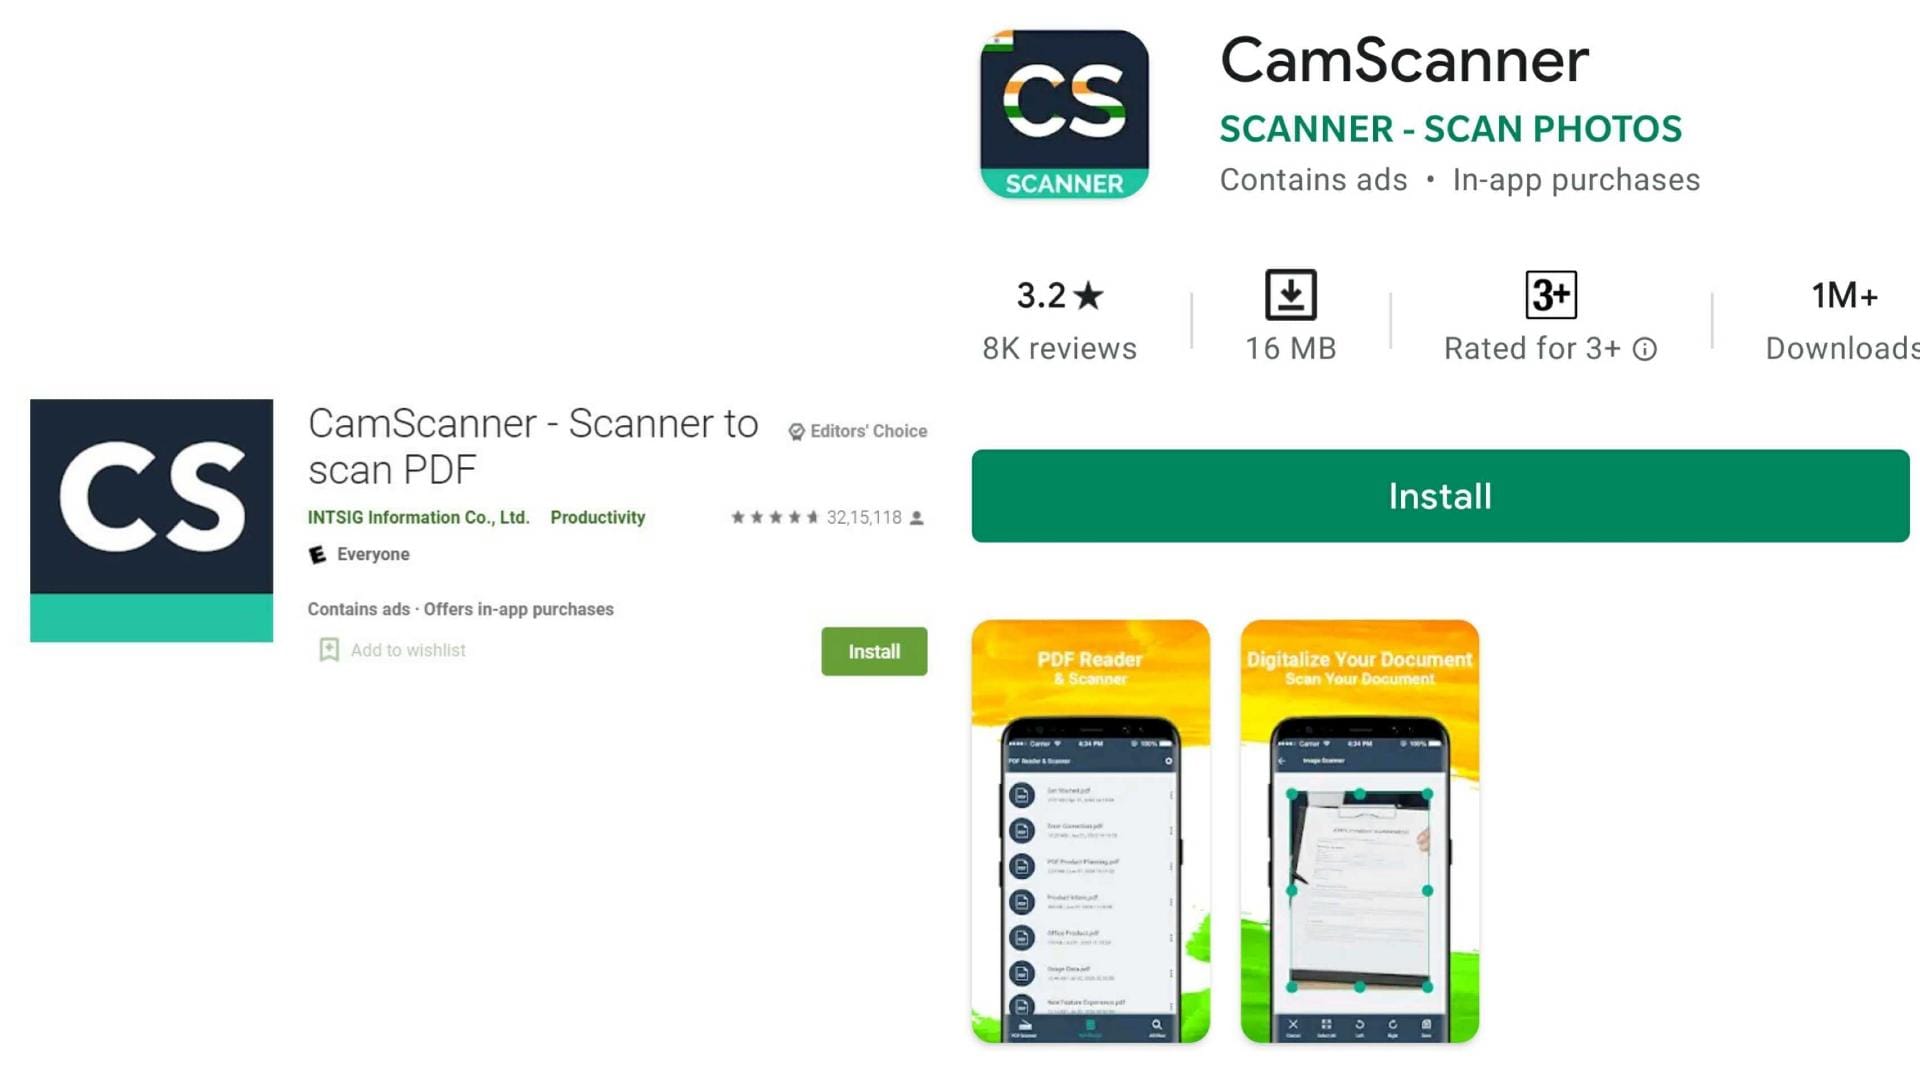 CamScanner-CamScannerIndia